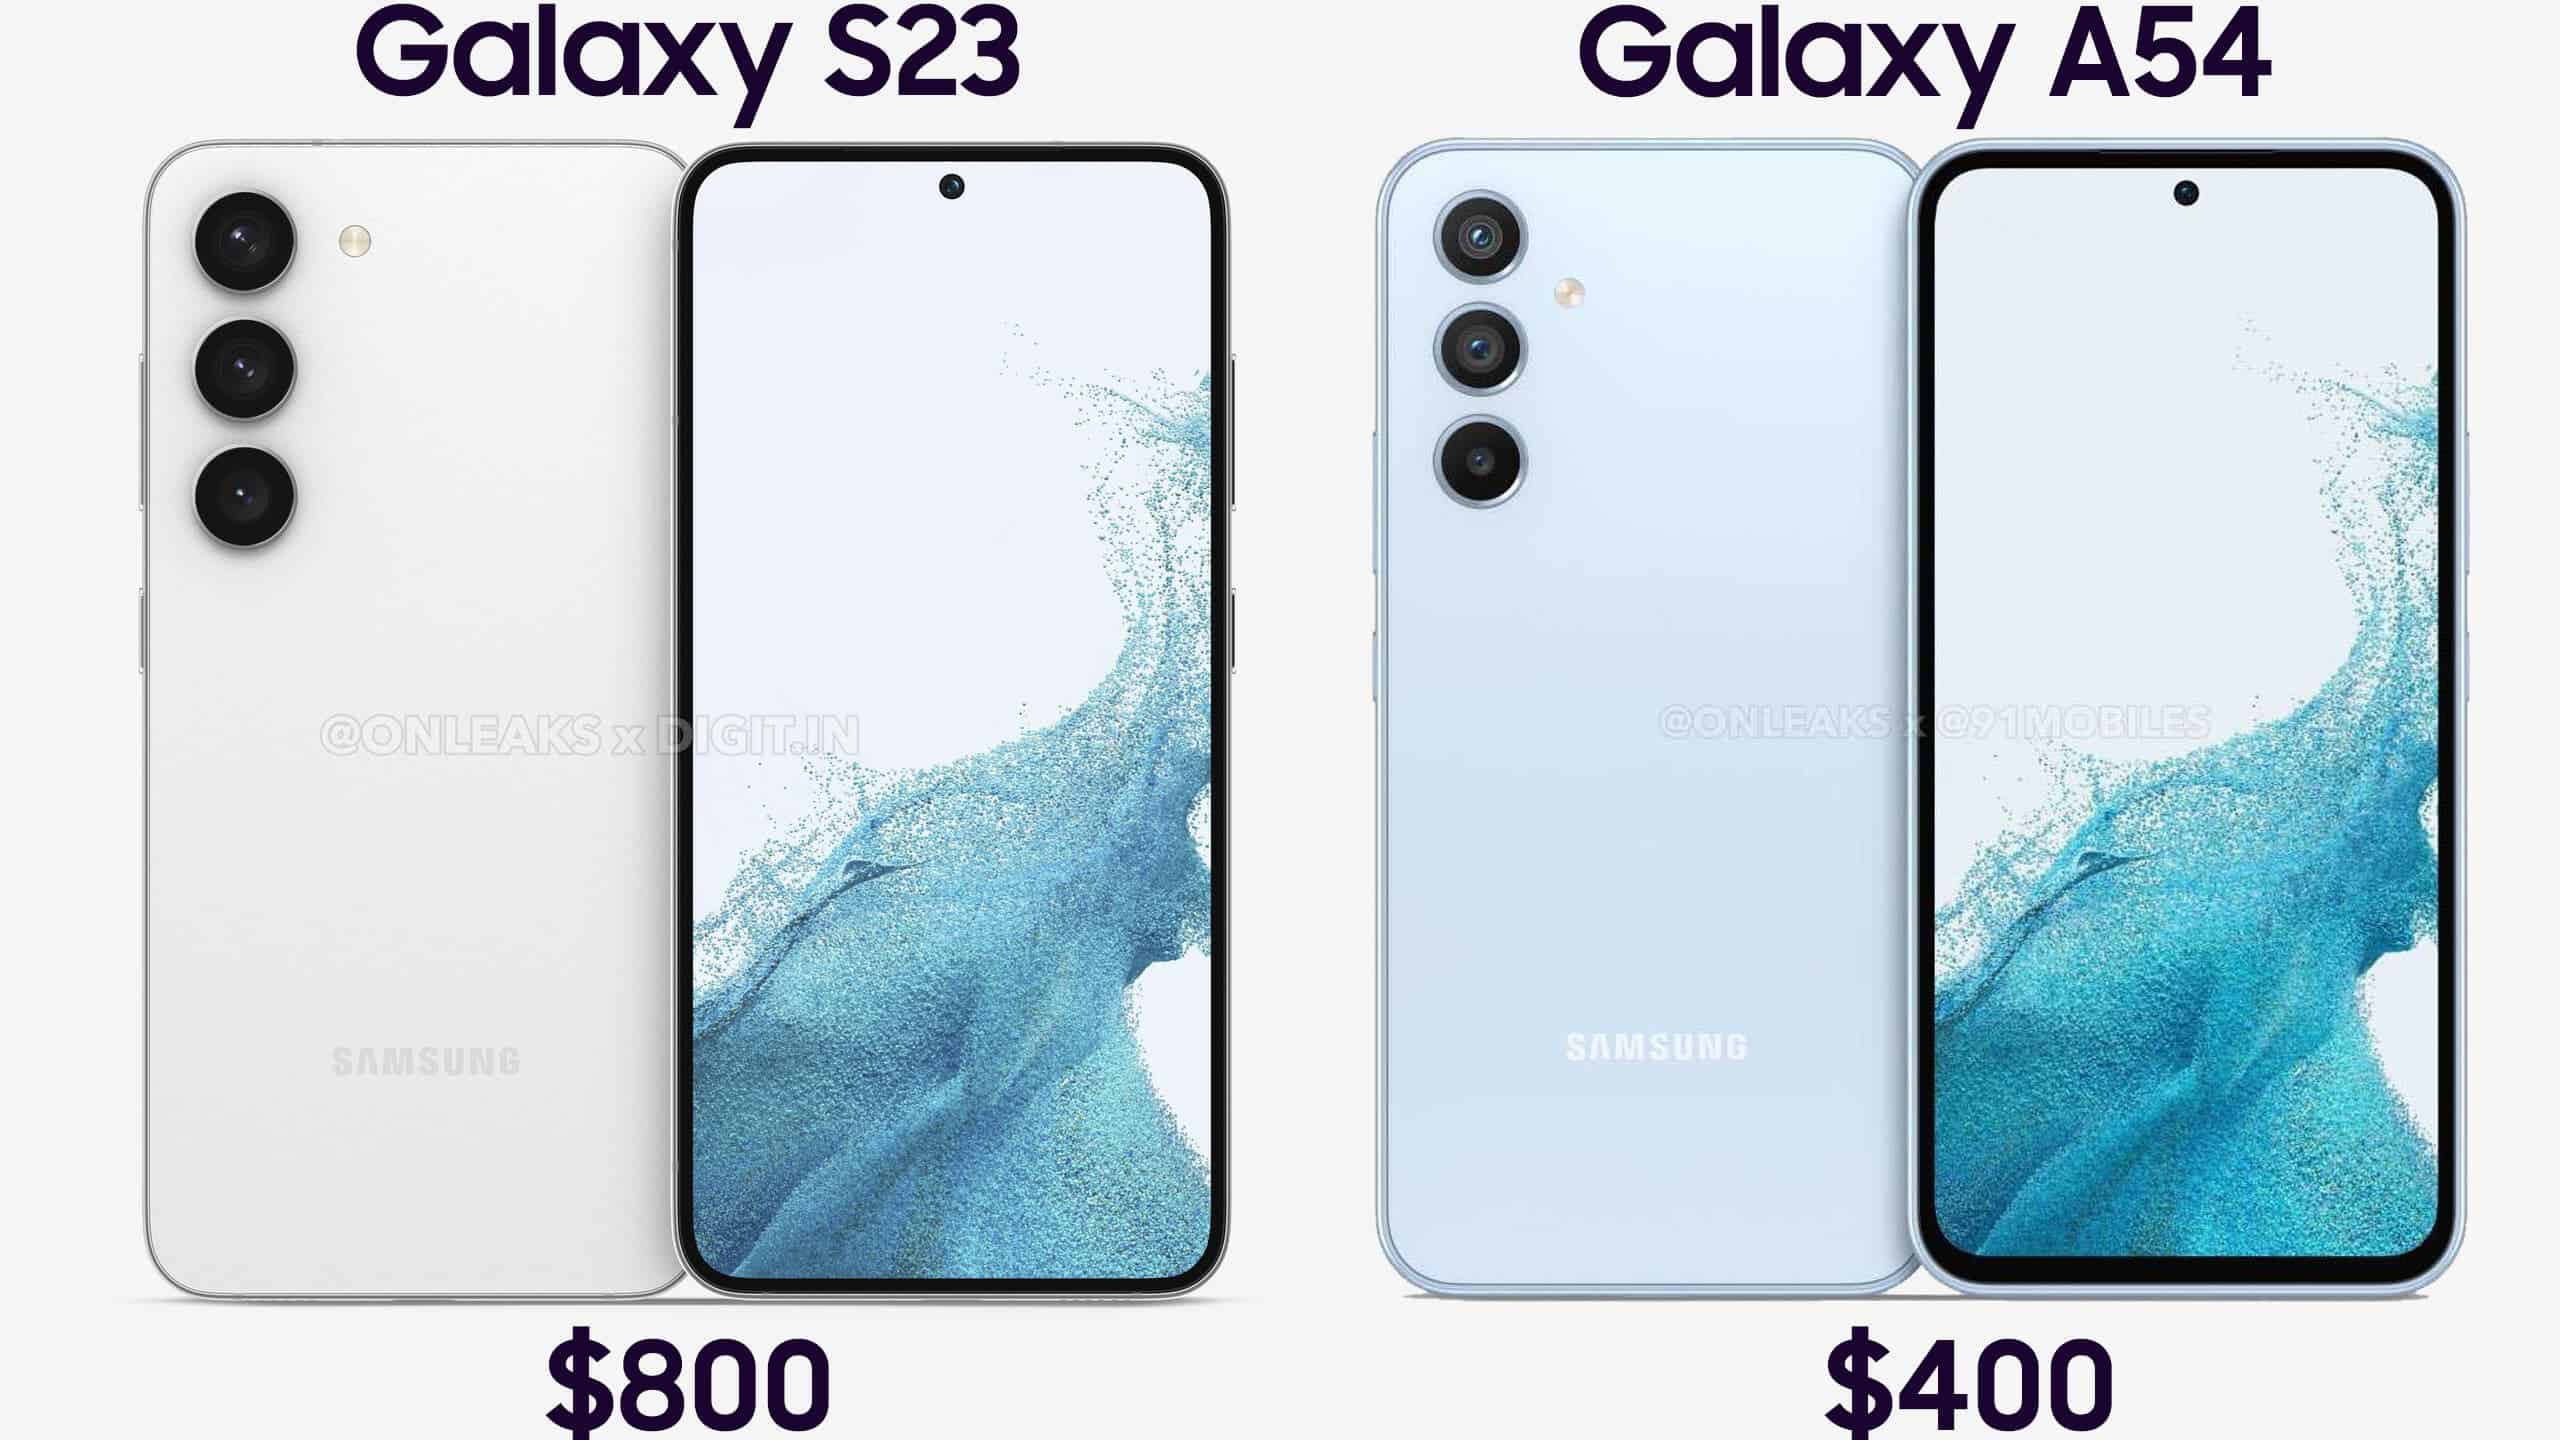 Galaxy S23 vs Galaxy A54 Price